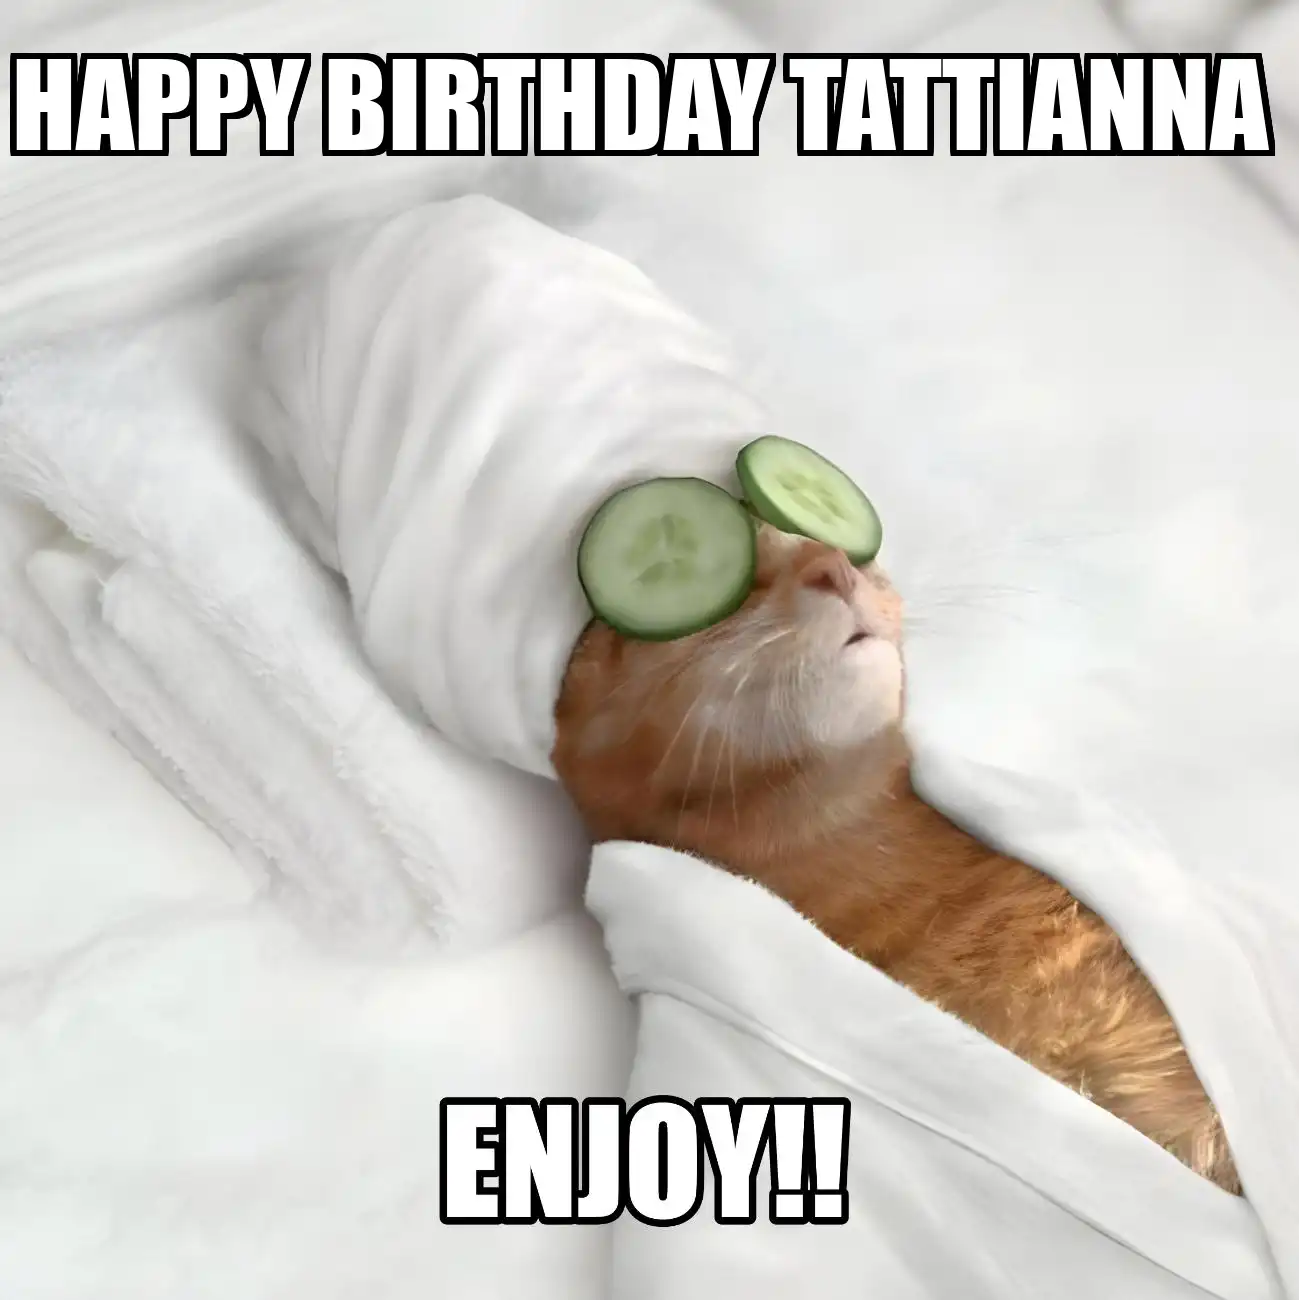 Happy Birthday Tattianna Enjoy Cat Meme